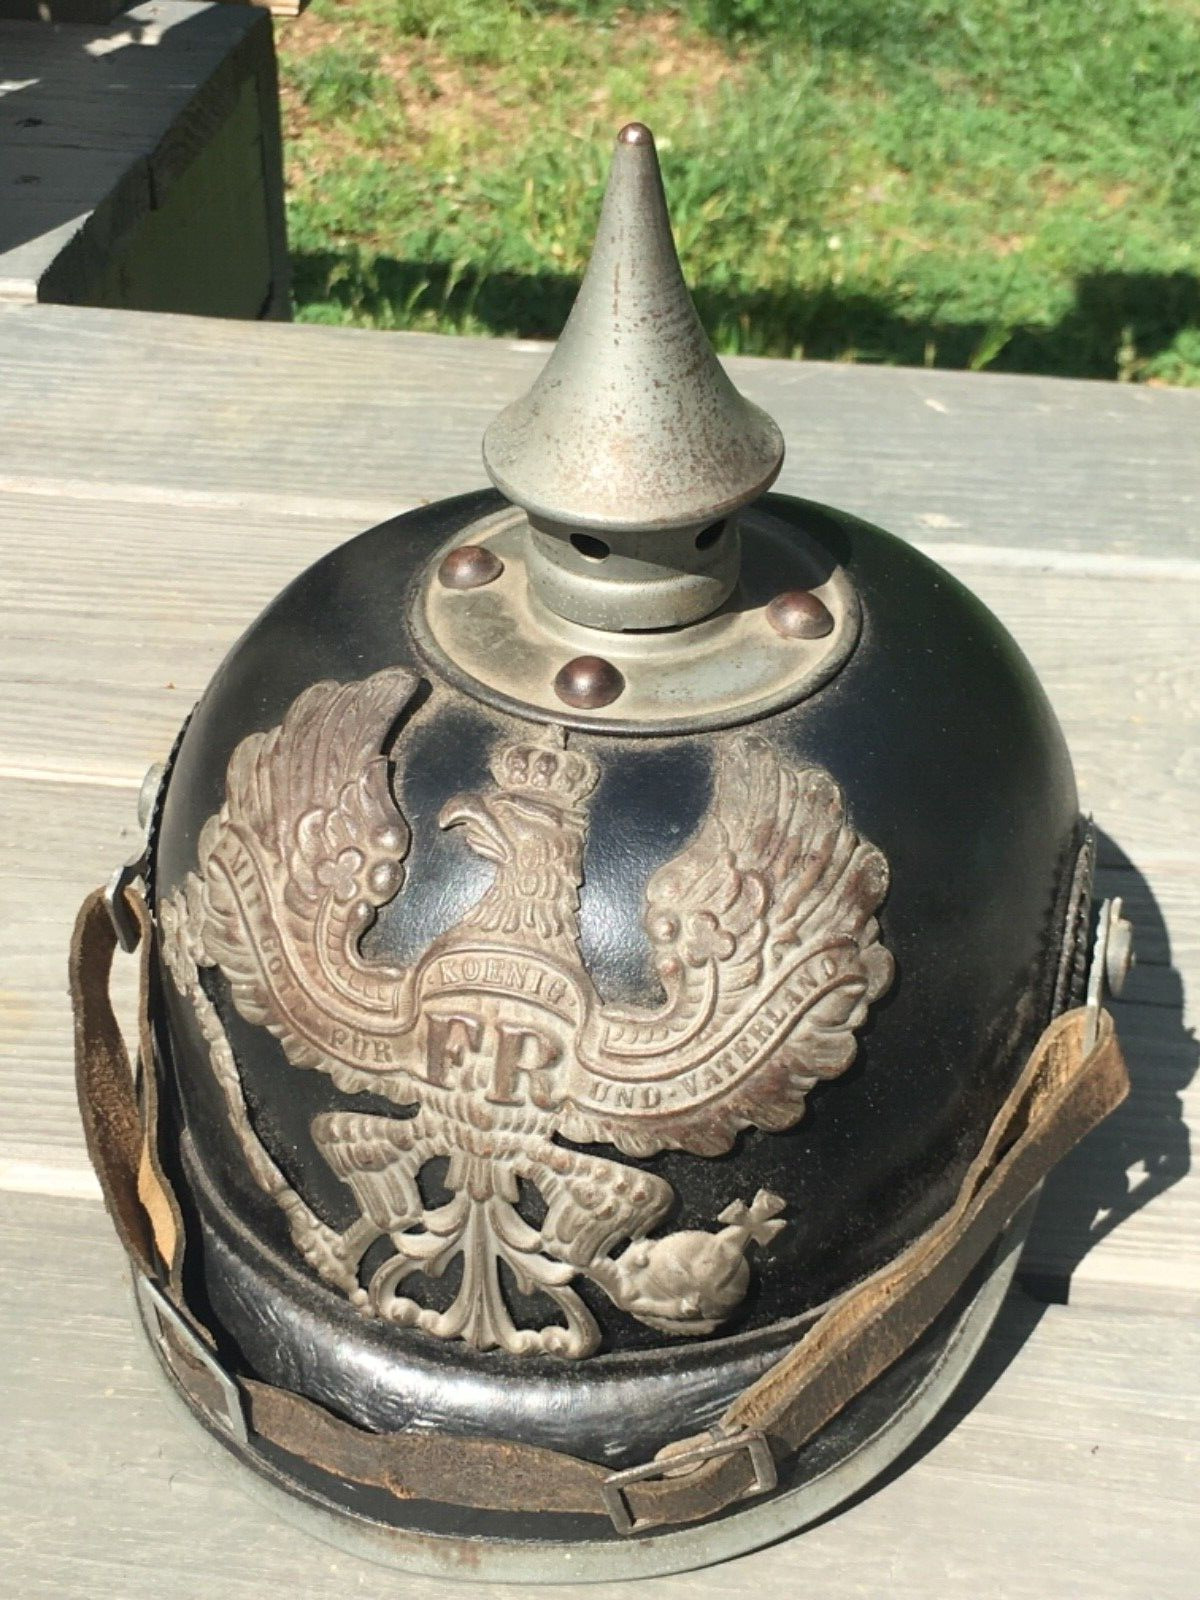 Original WW1 Prussian Pickelhaube Spiked Helmet, Unit Marked Jaeger Regiment 171